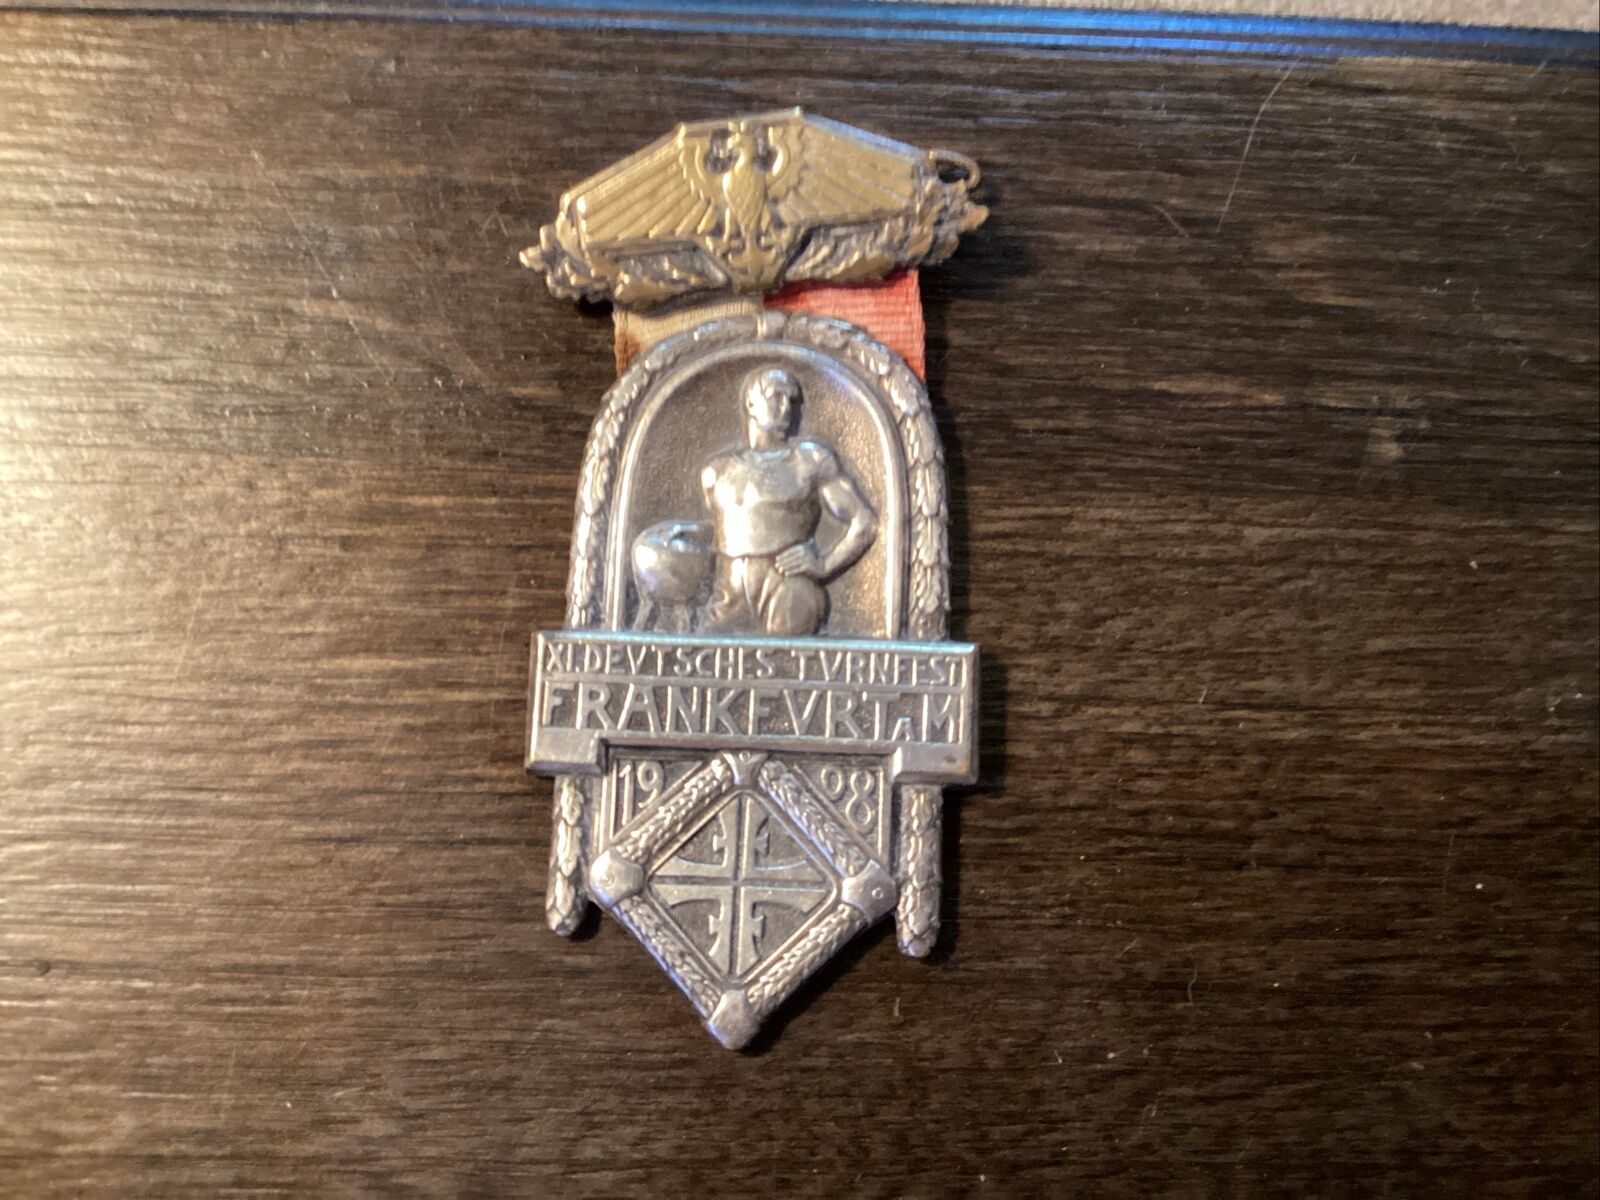 Vintage Pre WWI German Medal XI.DEVTSCHES TVRNFEST FRANKFVRTaM